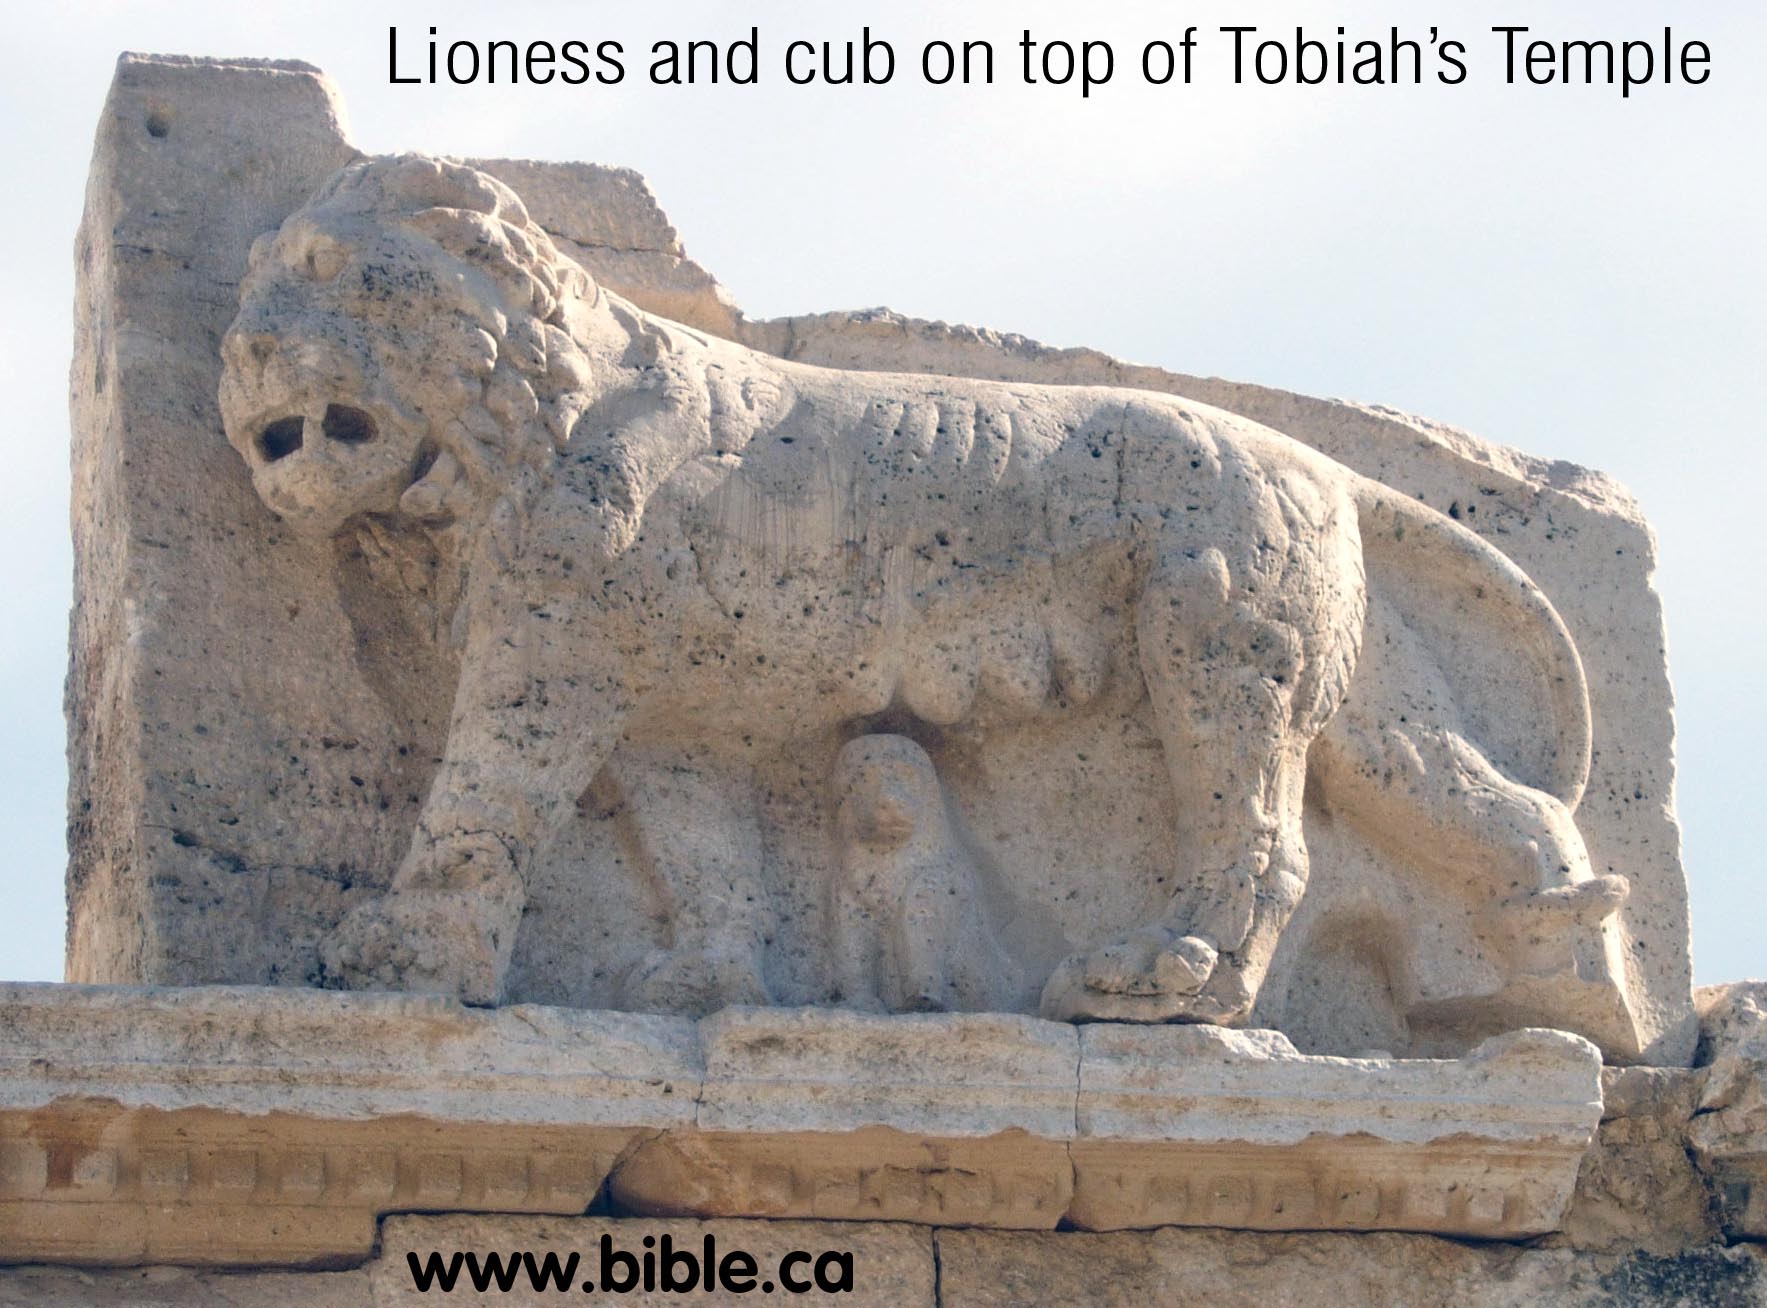 Terceras Elecciones - Página 3 Bible-archeology-tobiah-temple-lioness-cub